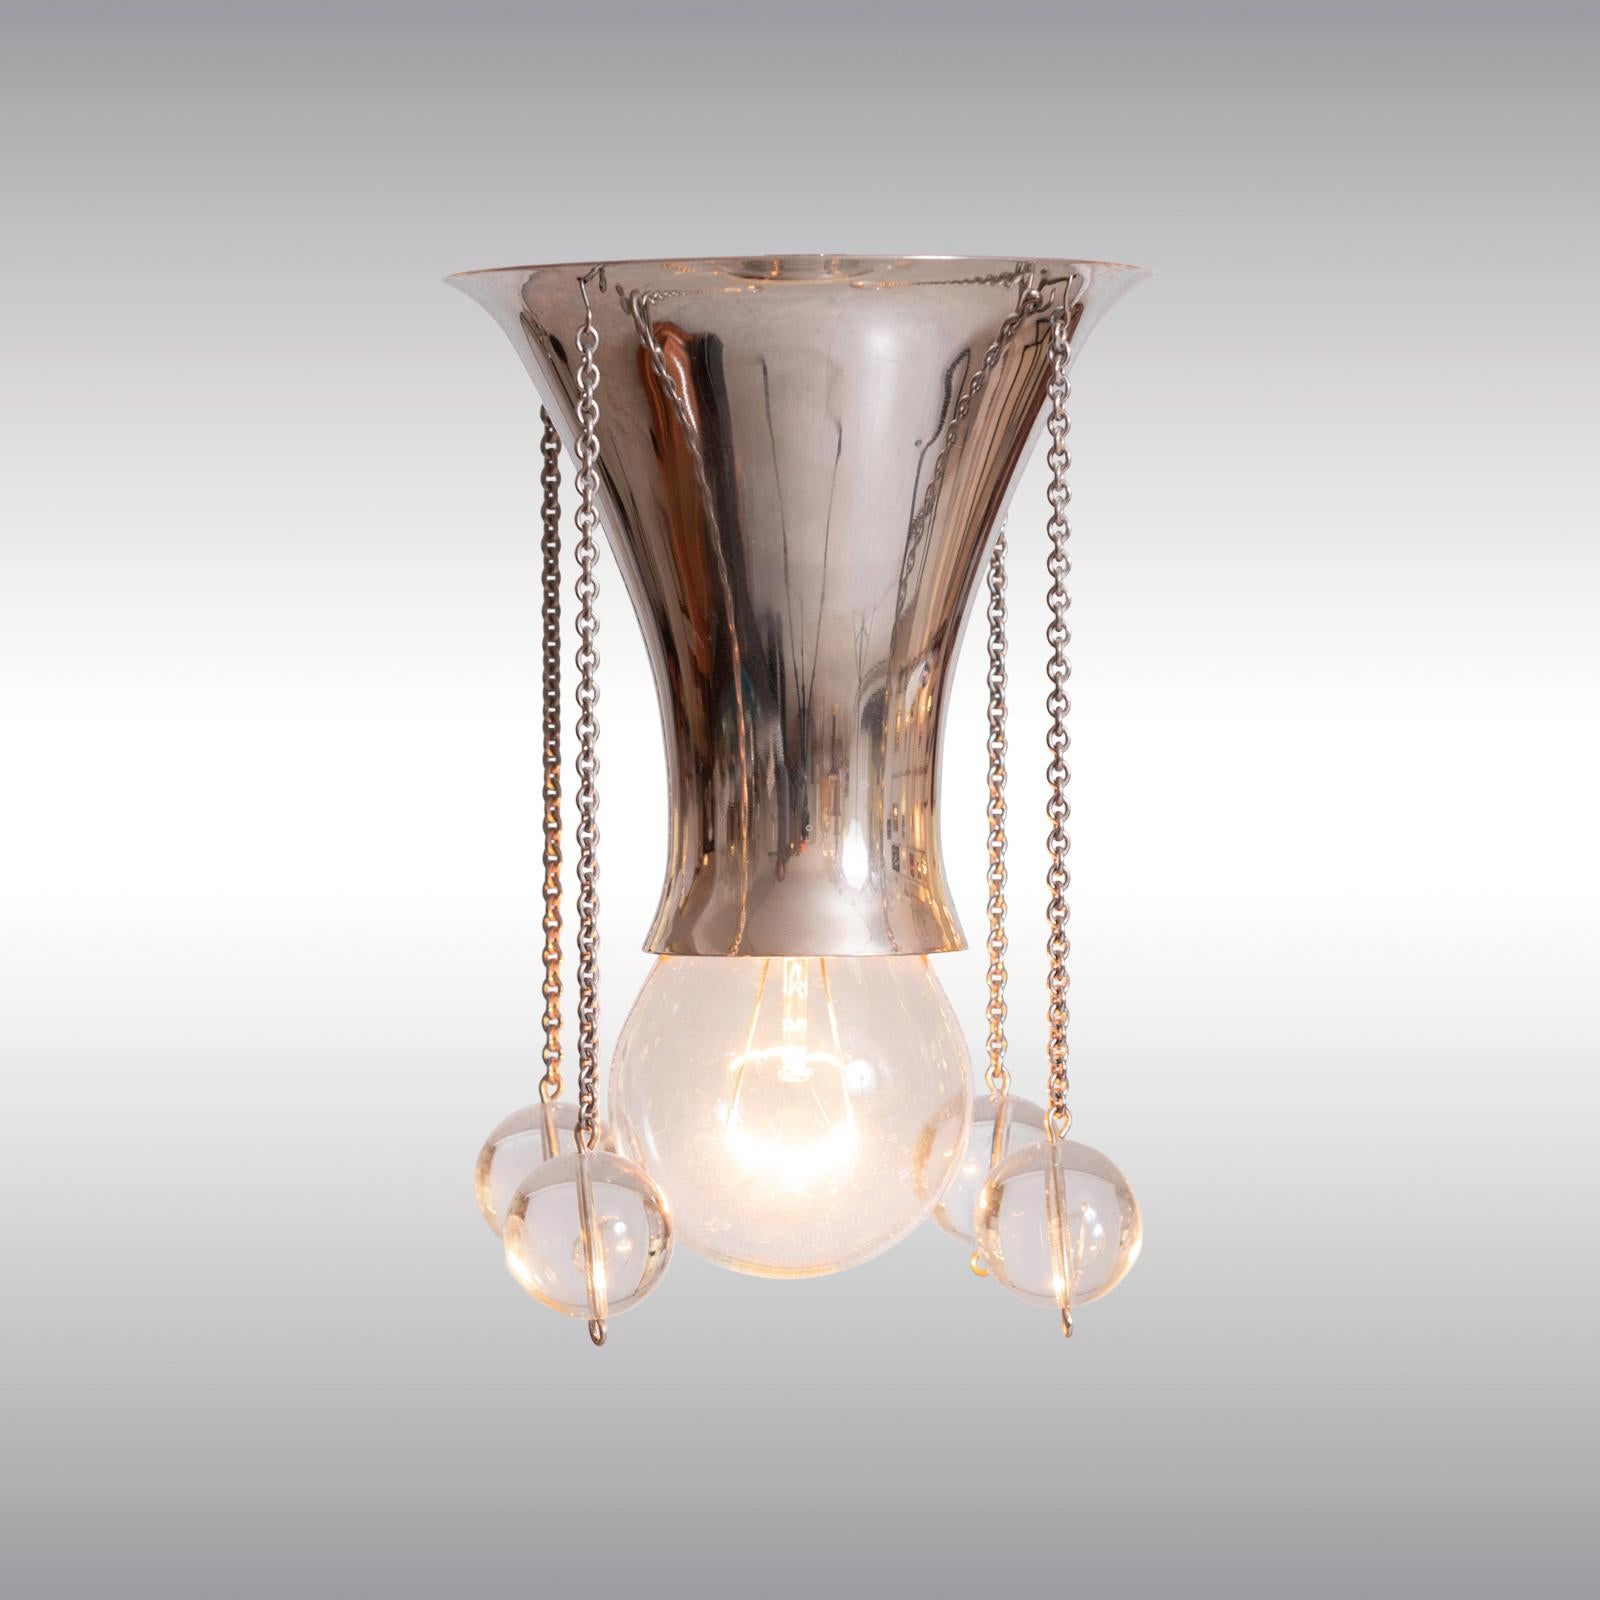 Contemporary Josef Hoffmann Wiener Werkstaette Jugendstil Ceiling Lamp